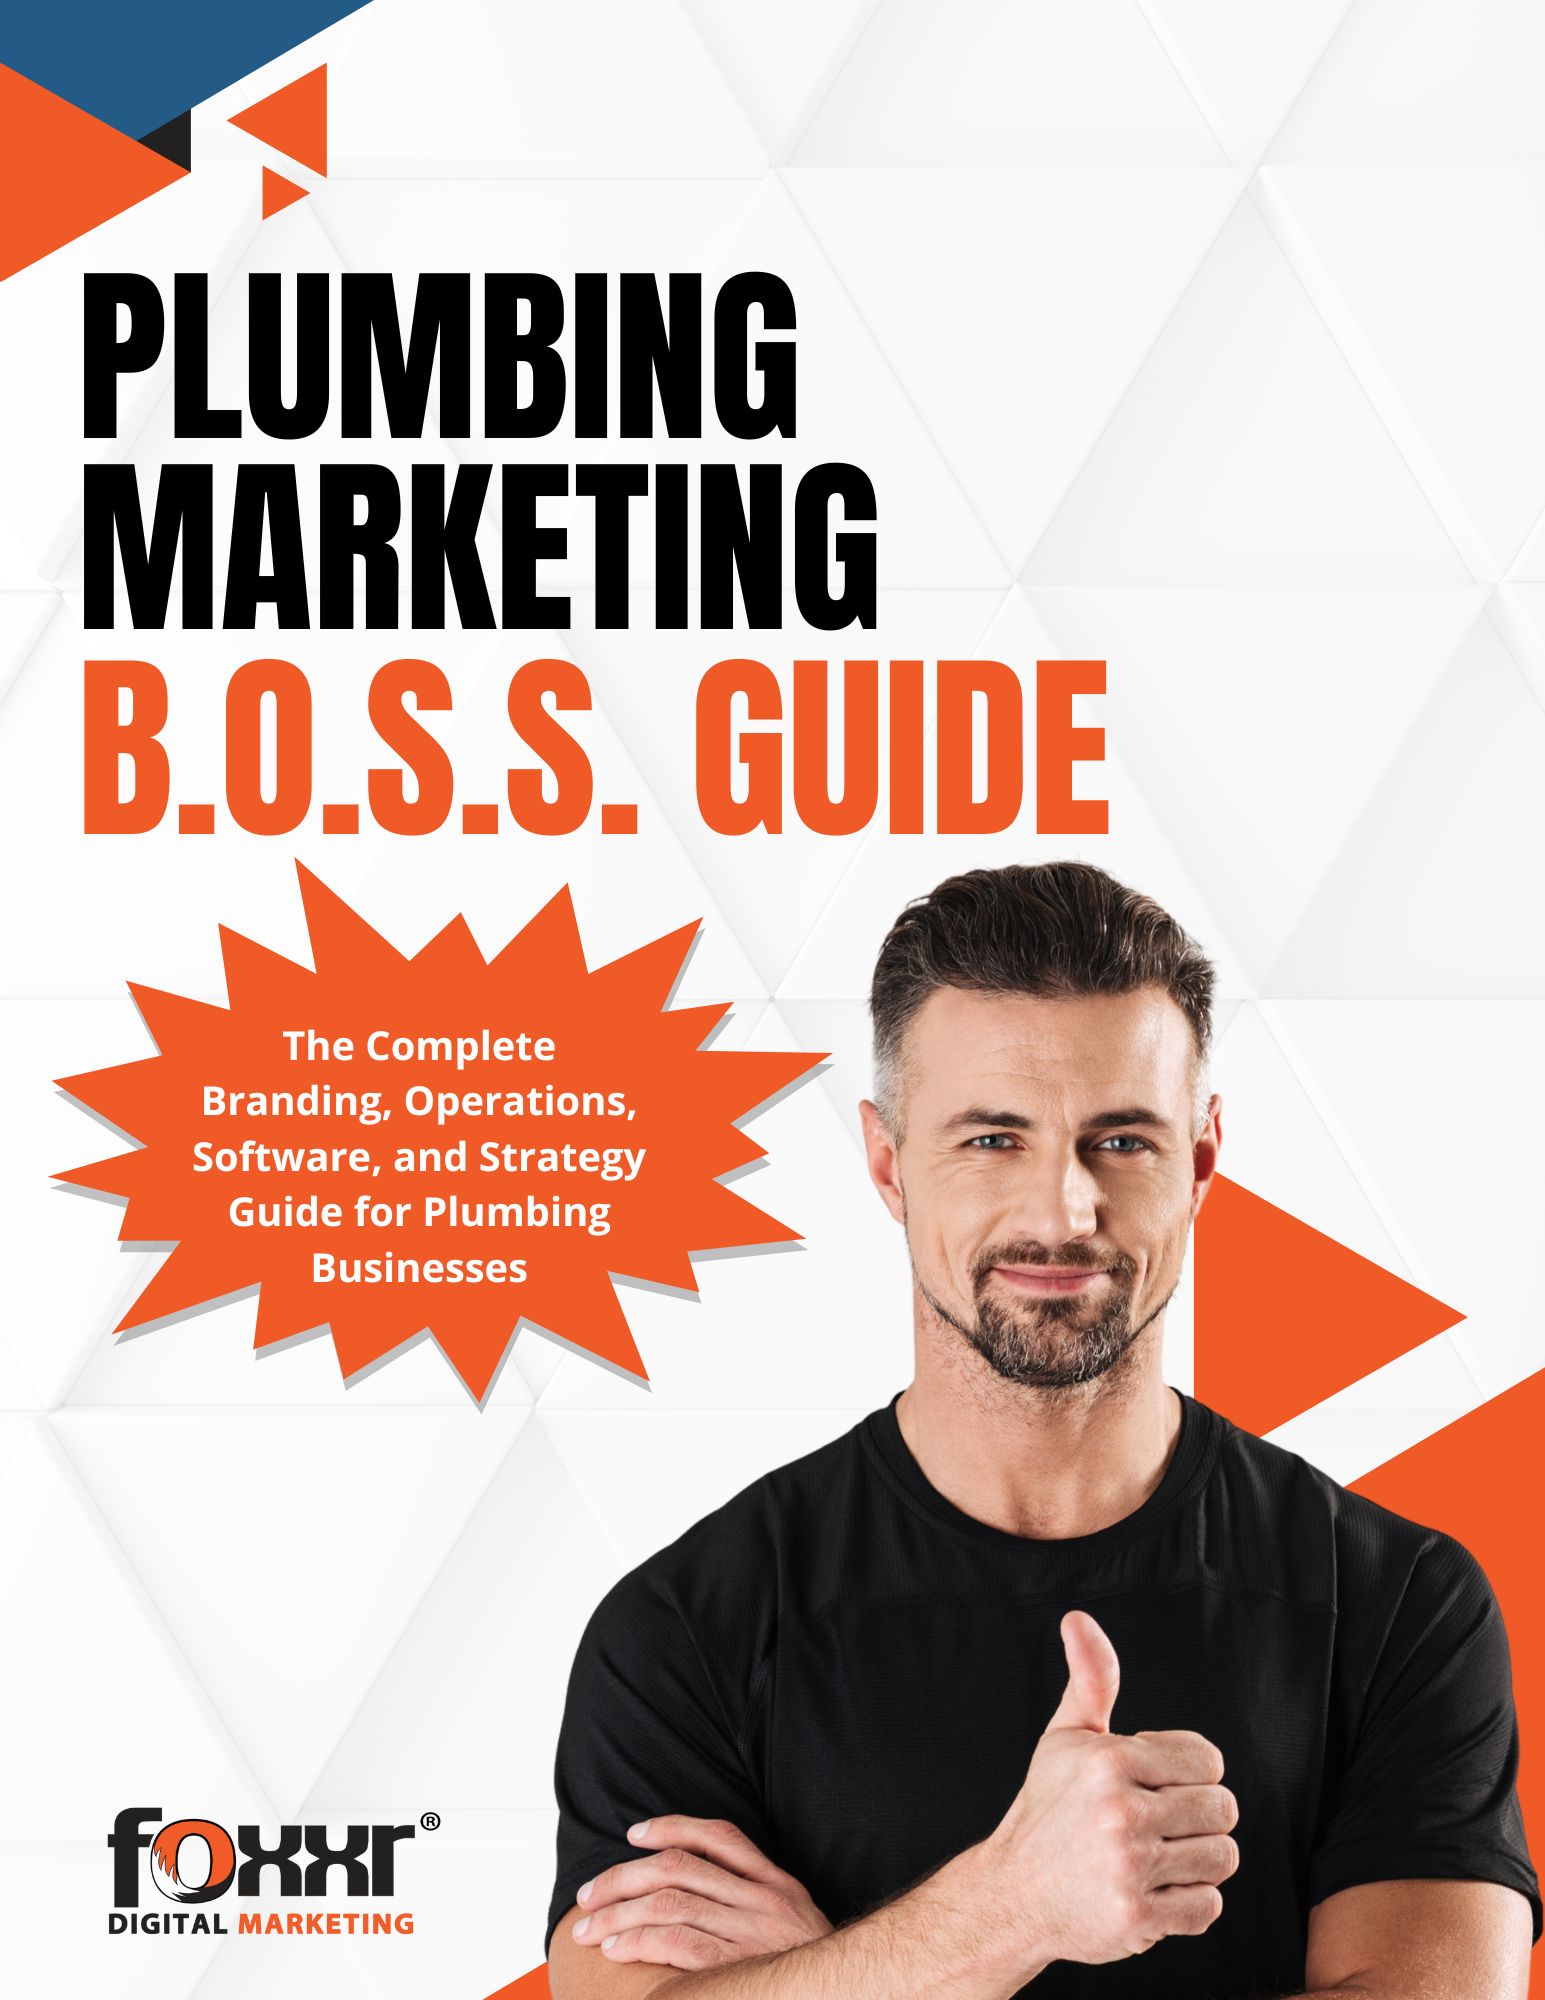 Plumbing marketing boss guide